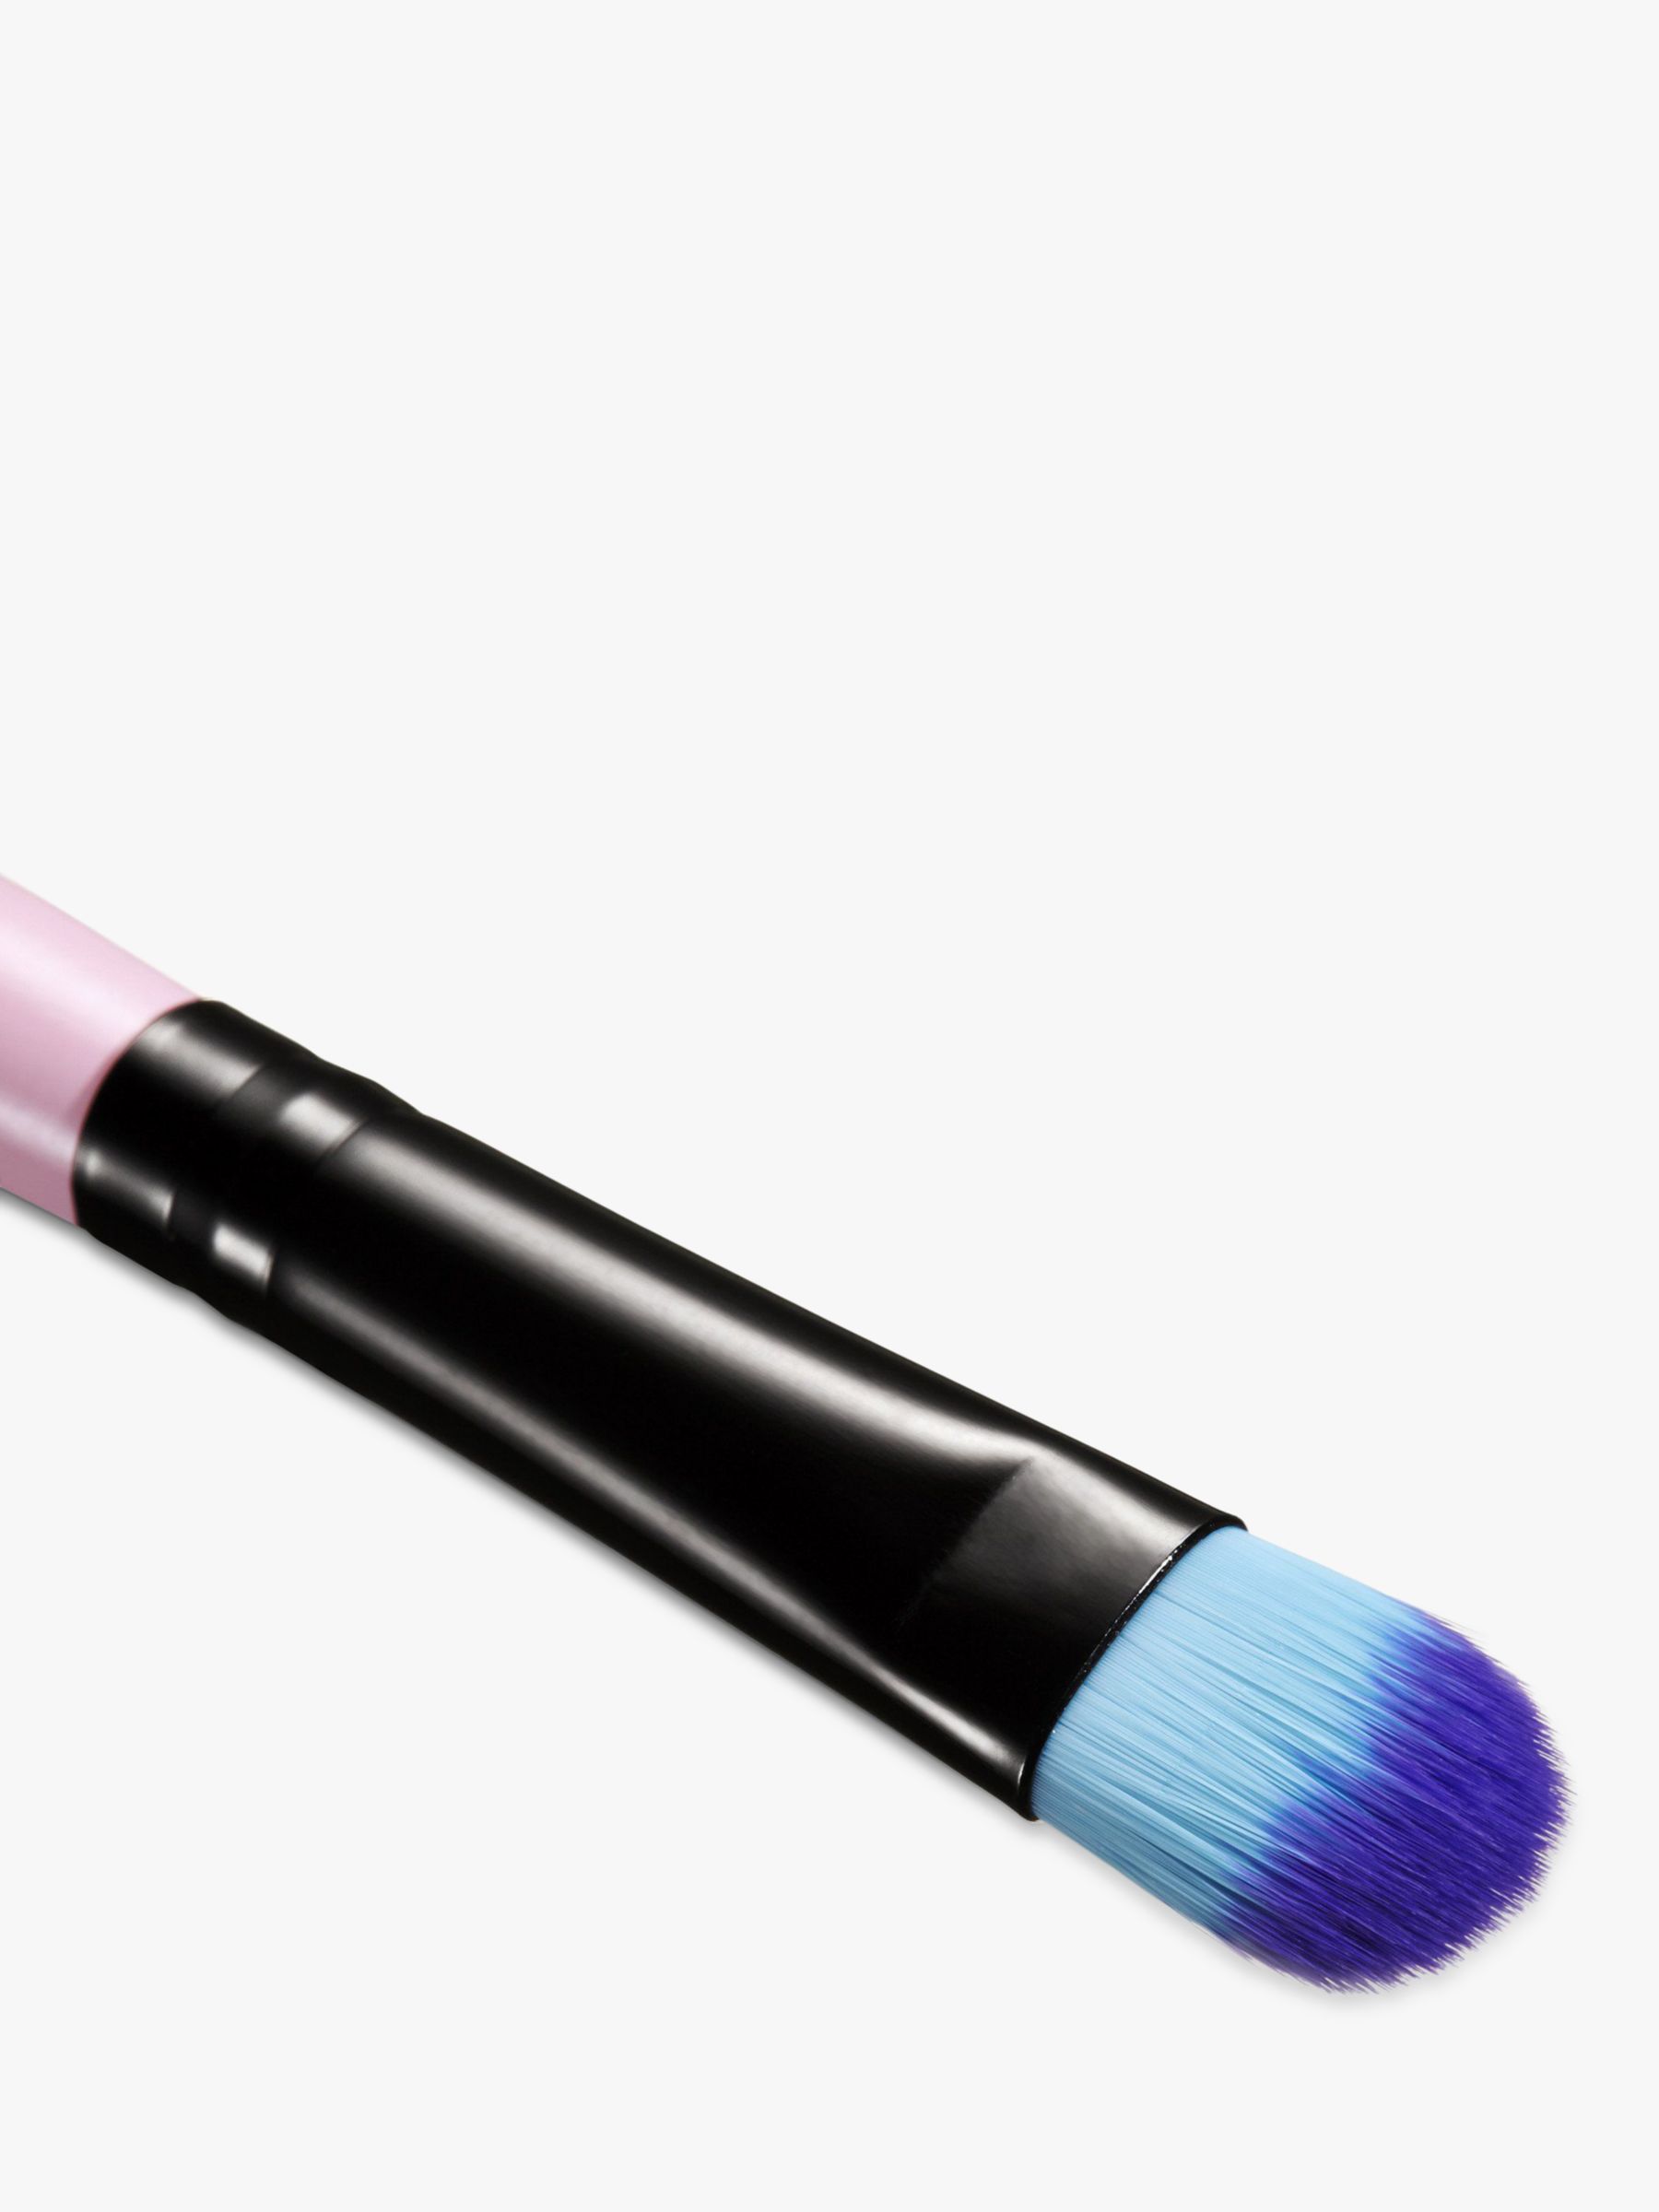 Spectrum Oval Concealer Makeup Brush